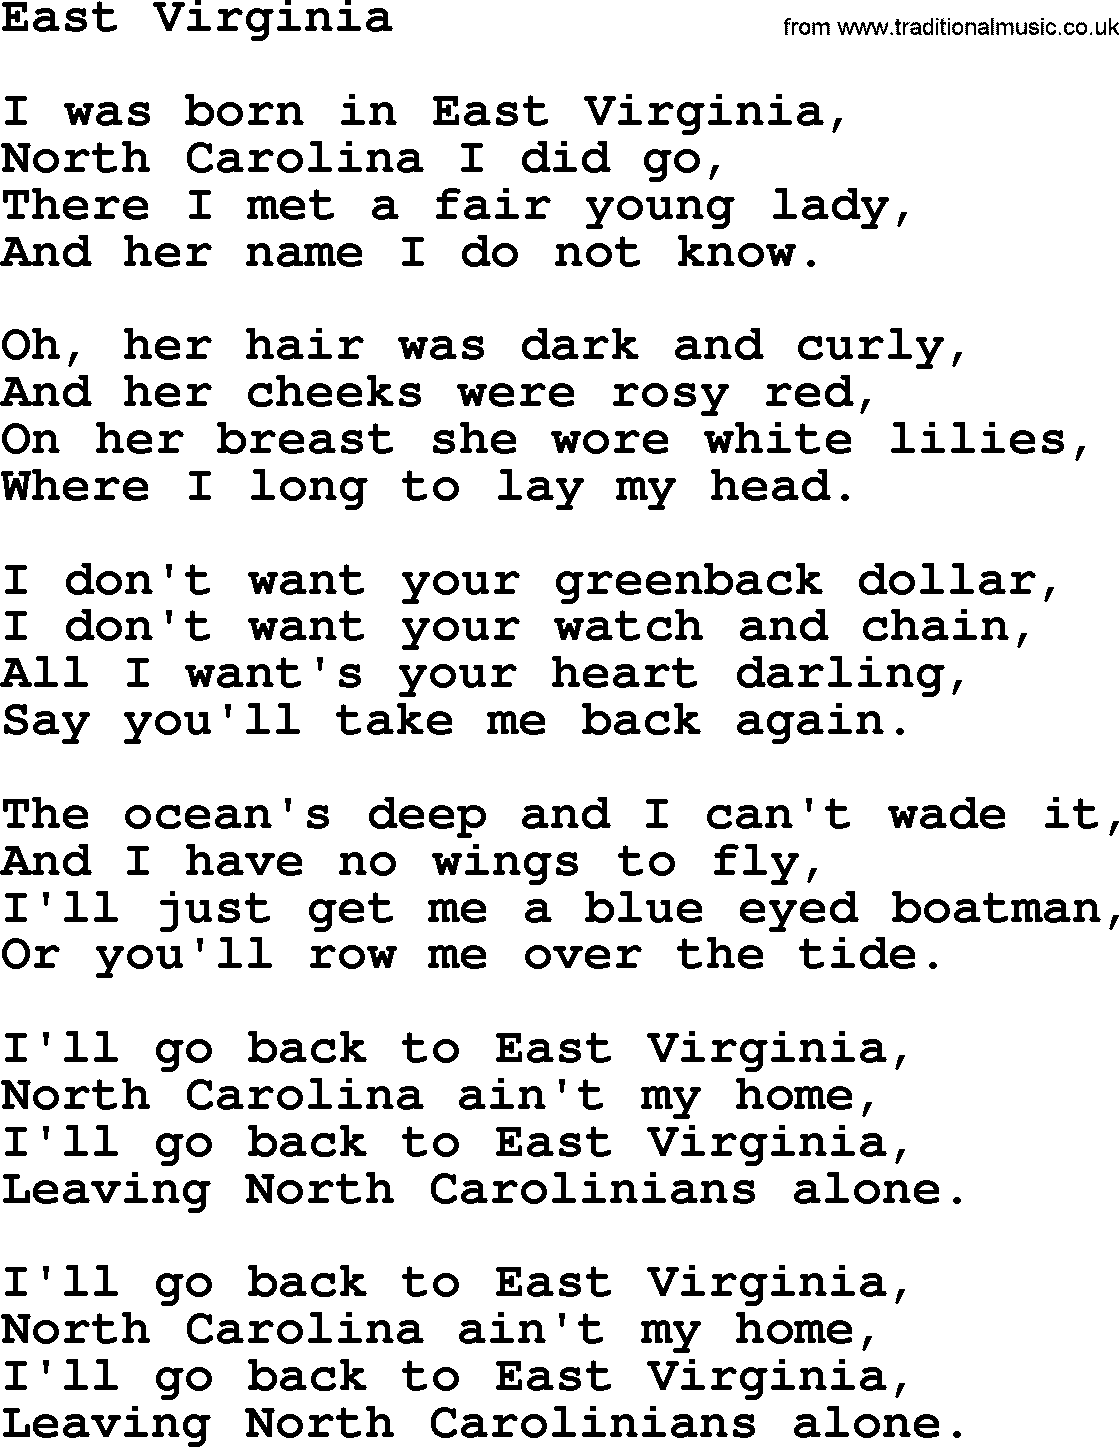 Joan Baez song East Virginia, lyrics